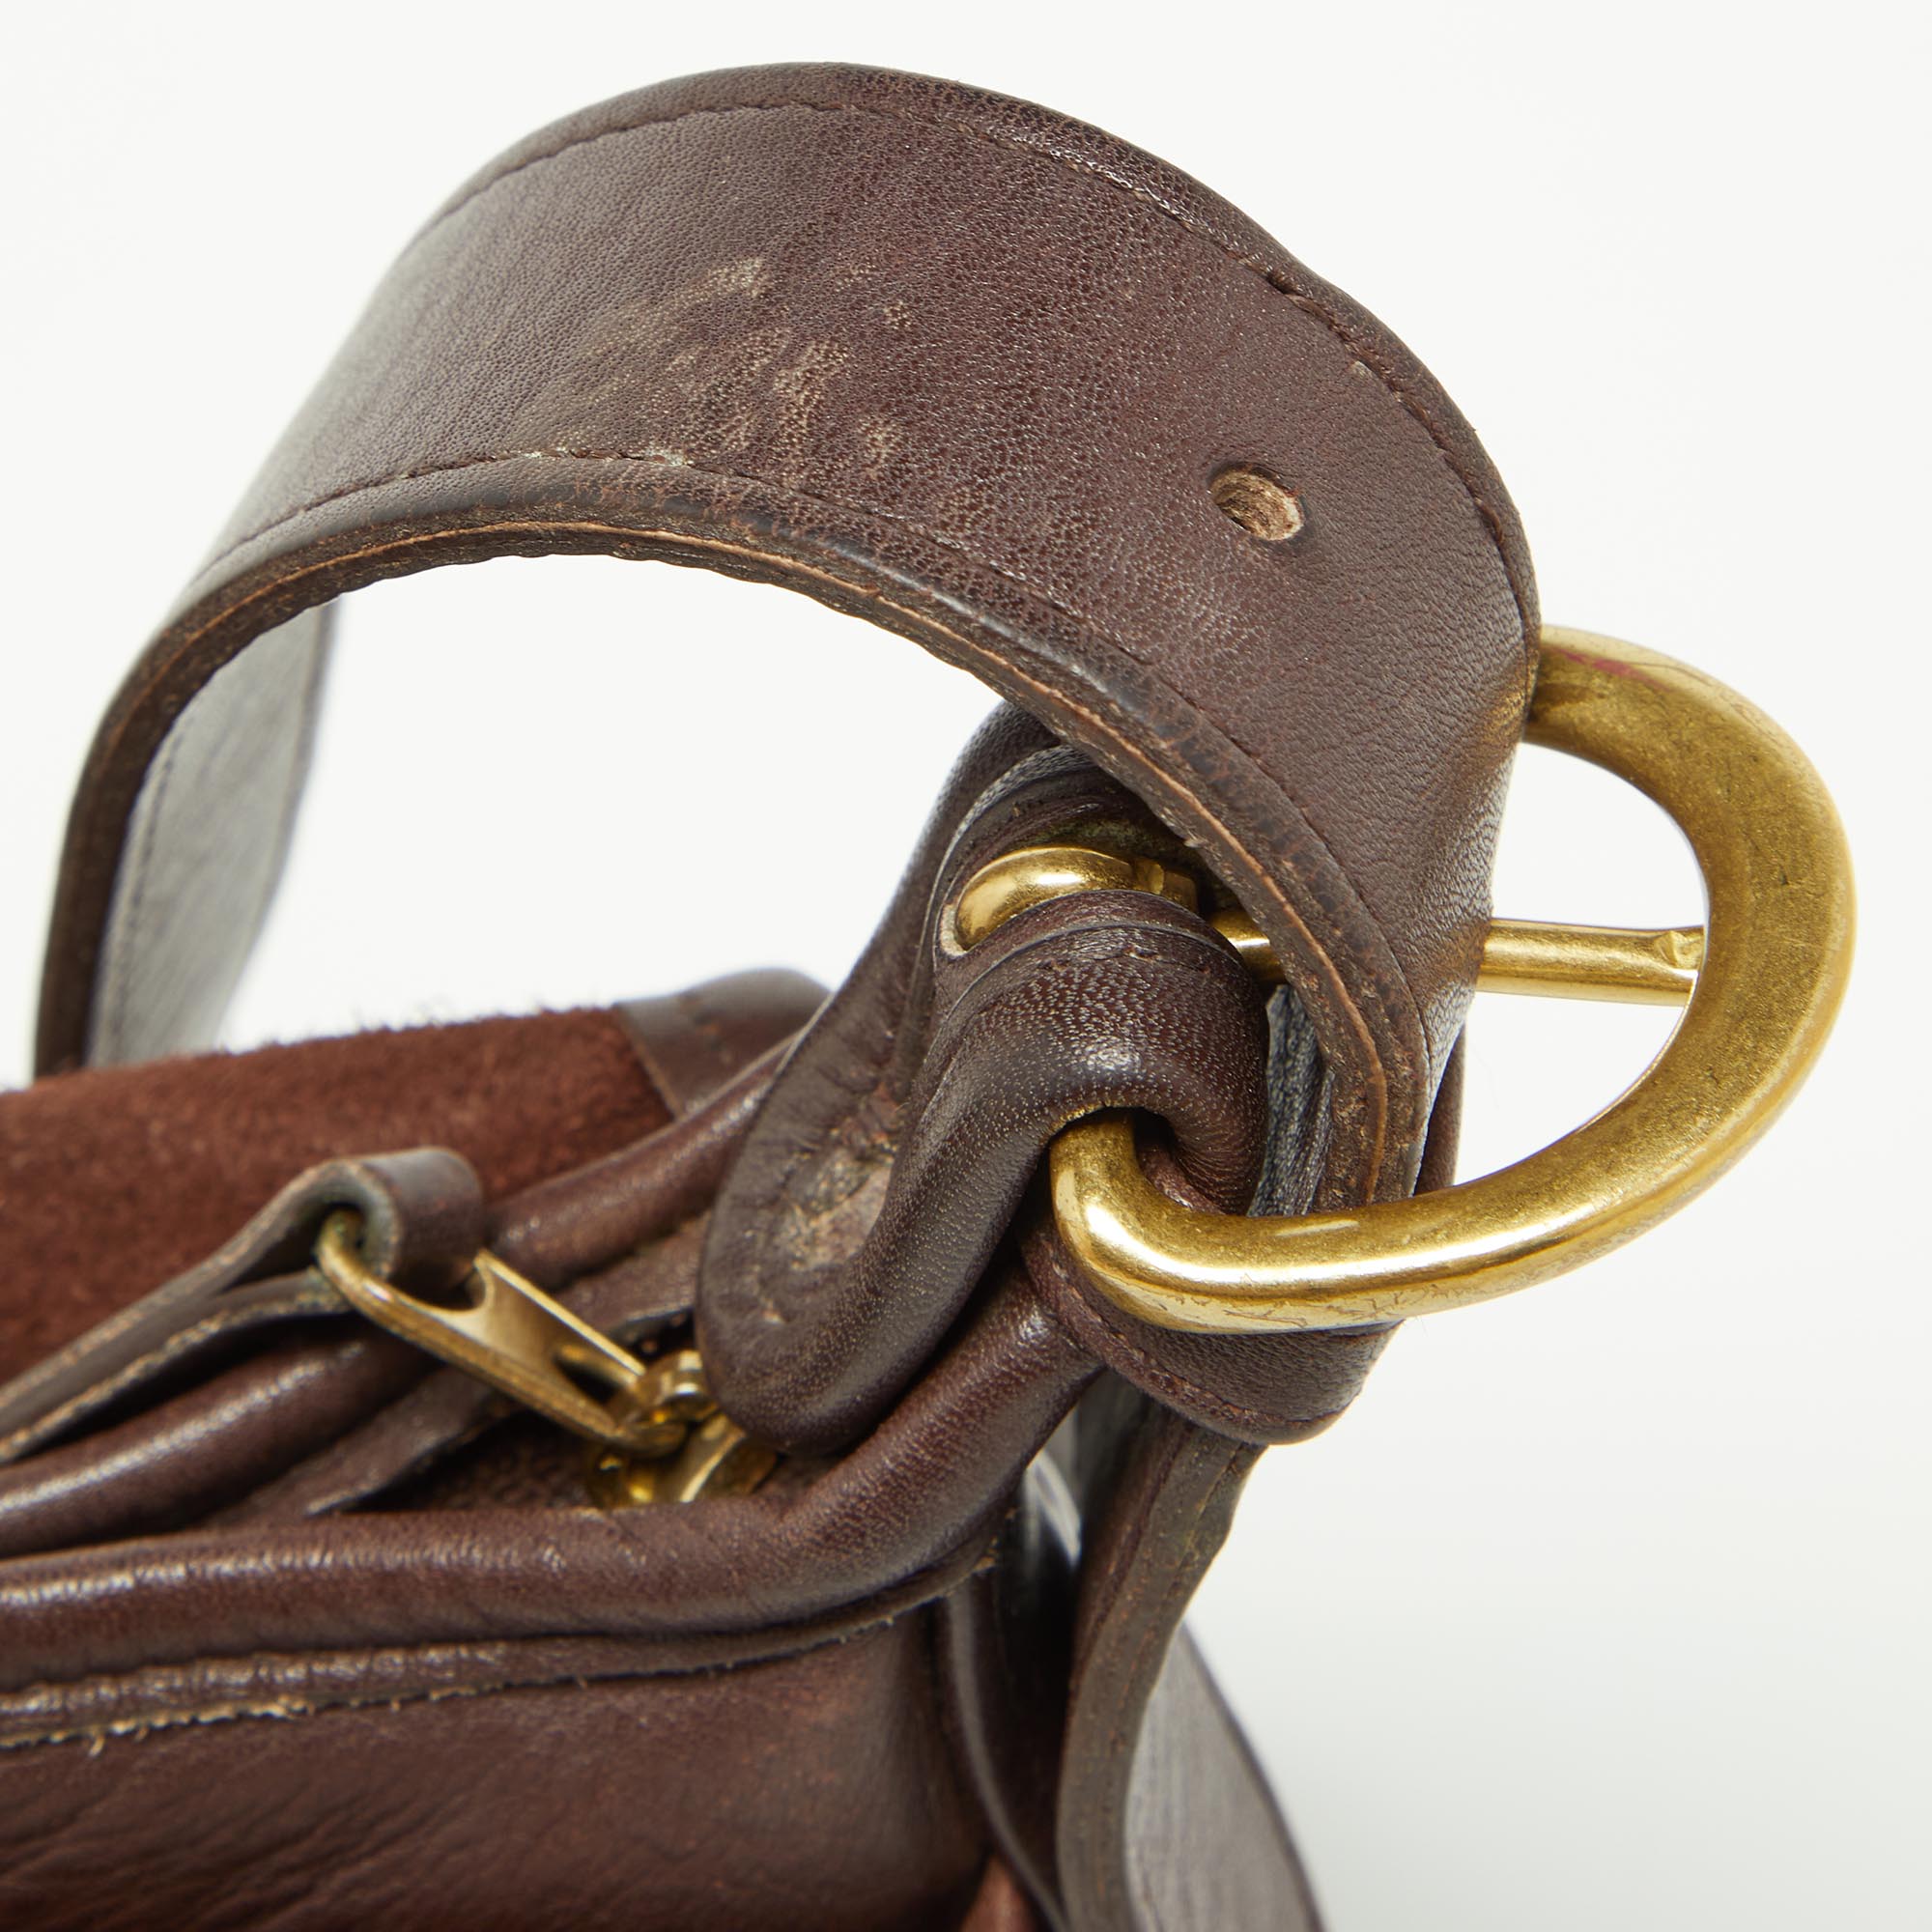 Coach Brown Leather Vintage Flap Crossbody Bag